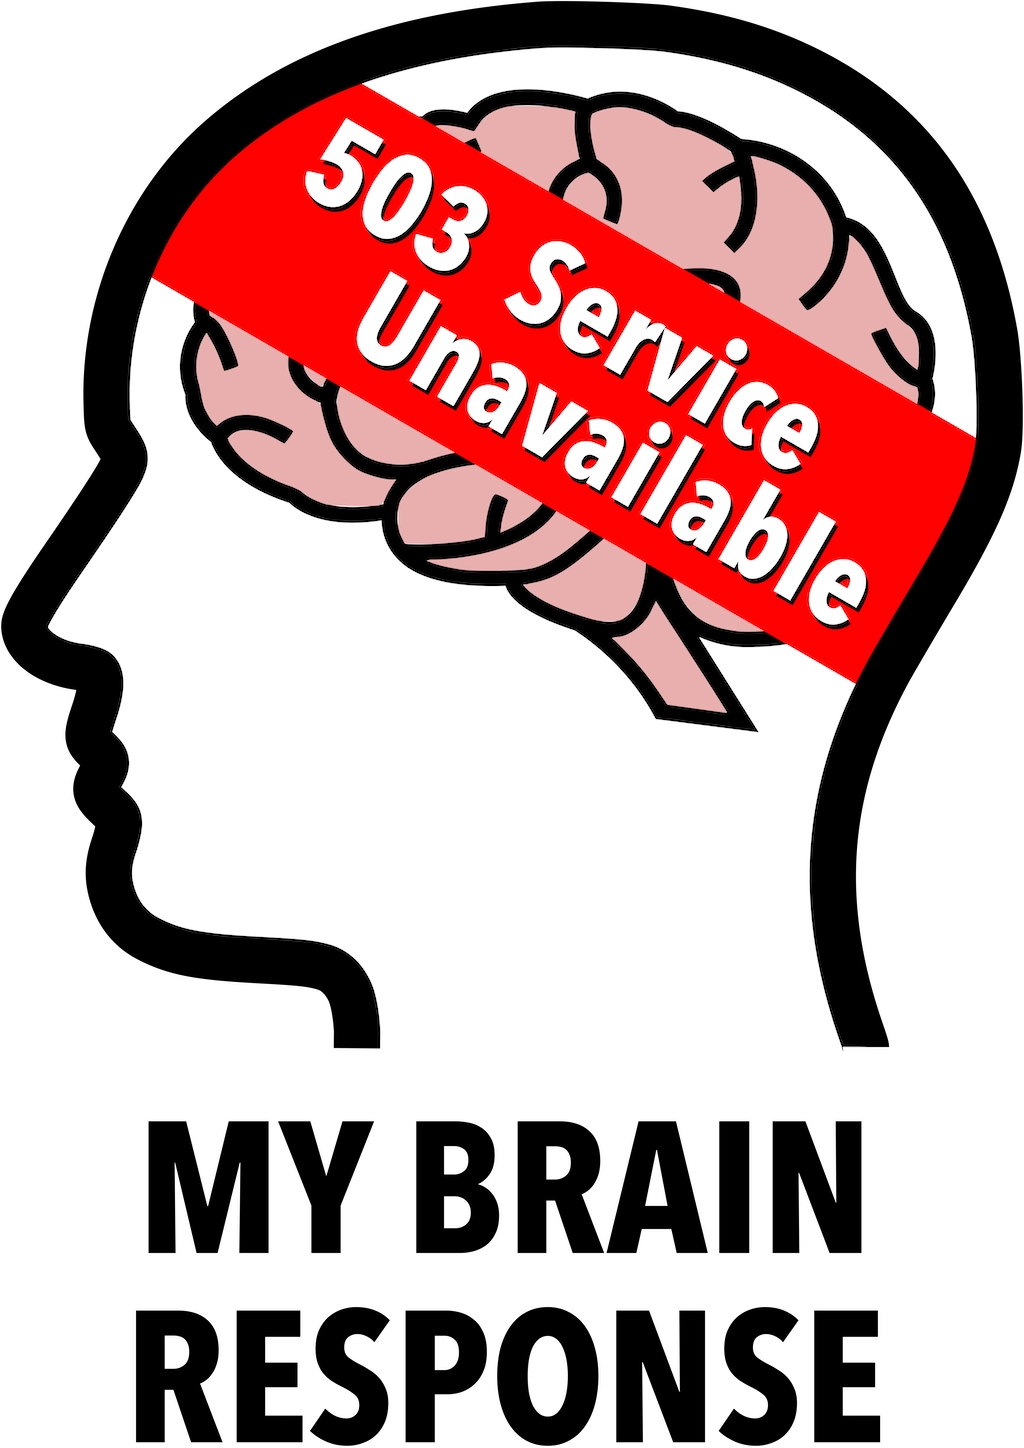 My Brain Response: 503 Service Unavailable